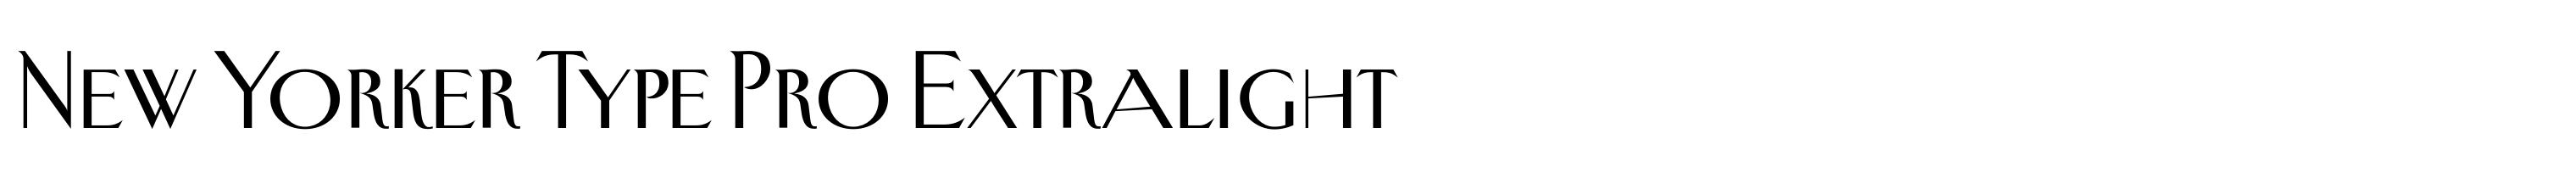 New Yorker Type Pro Extralight